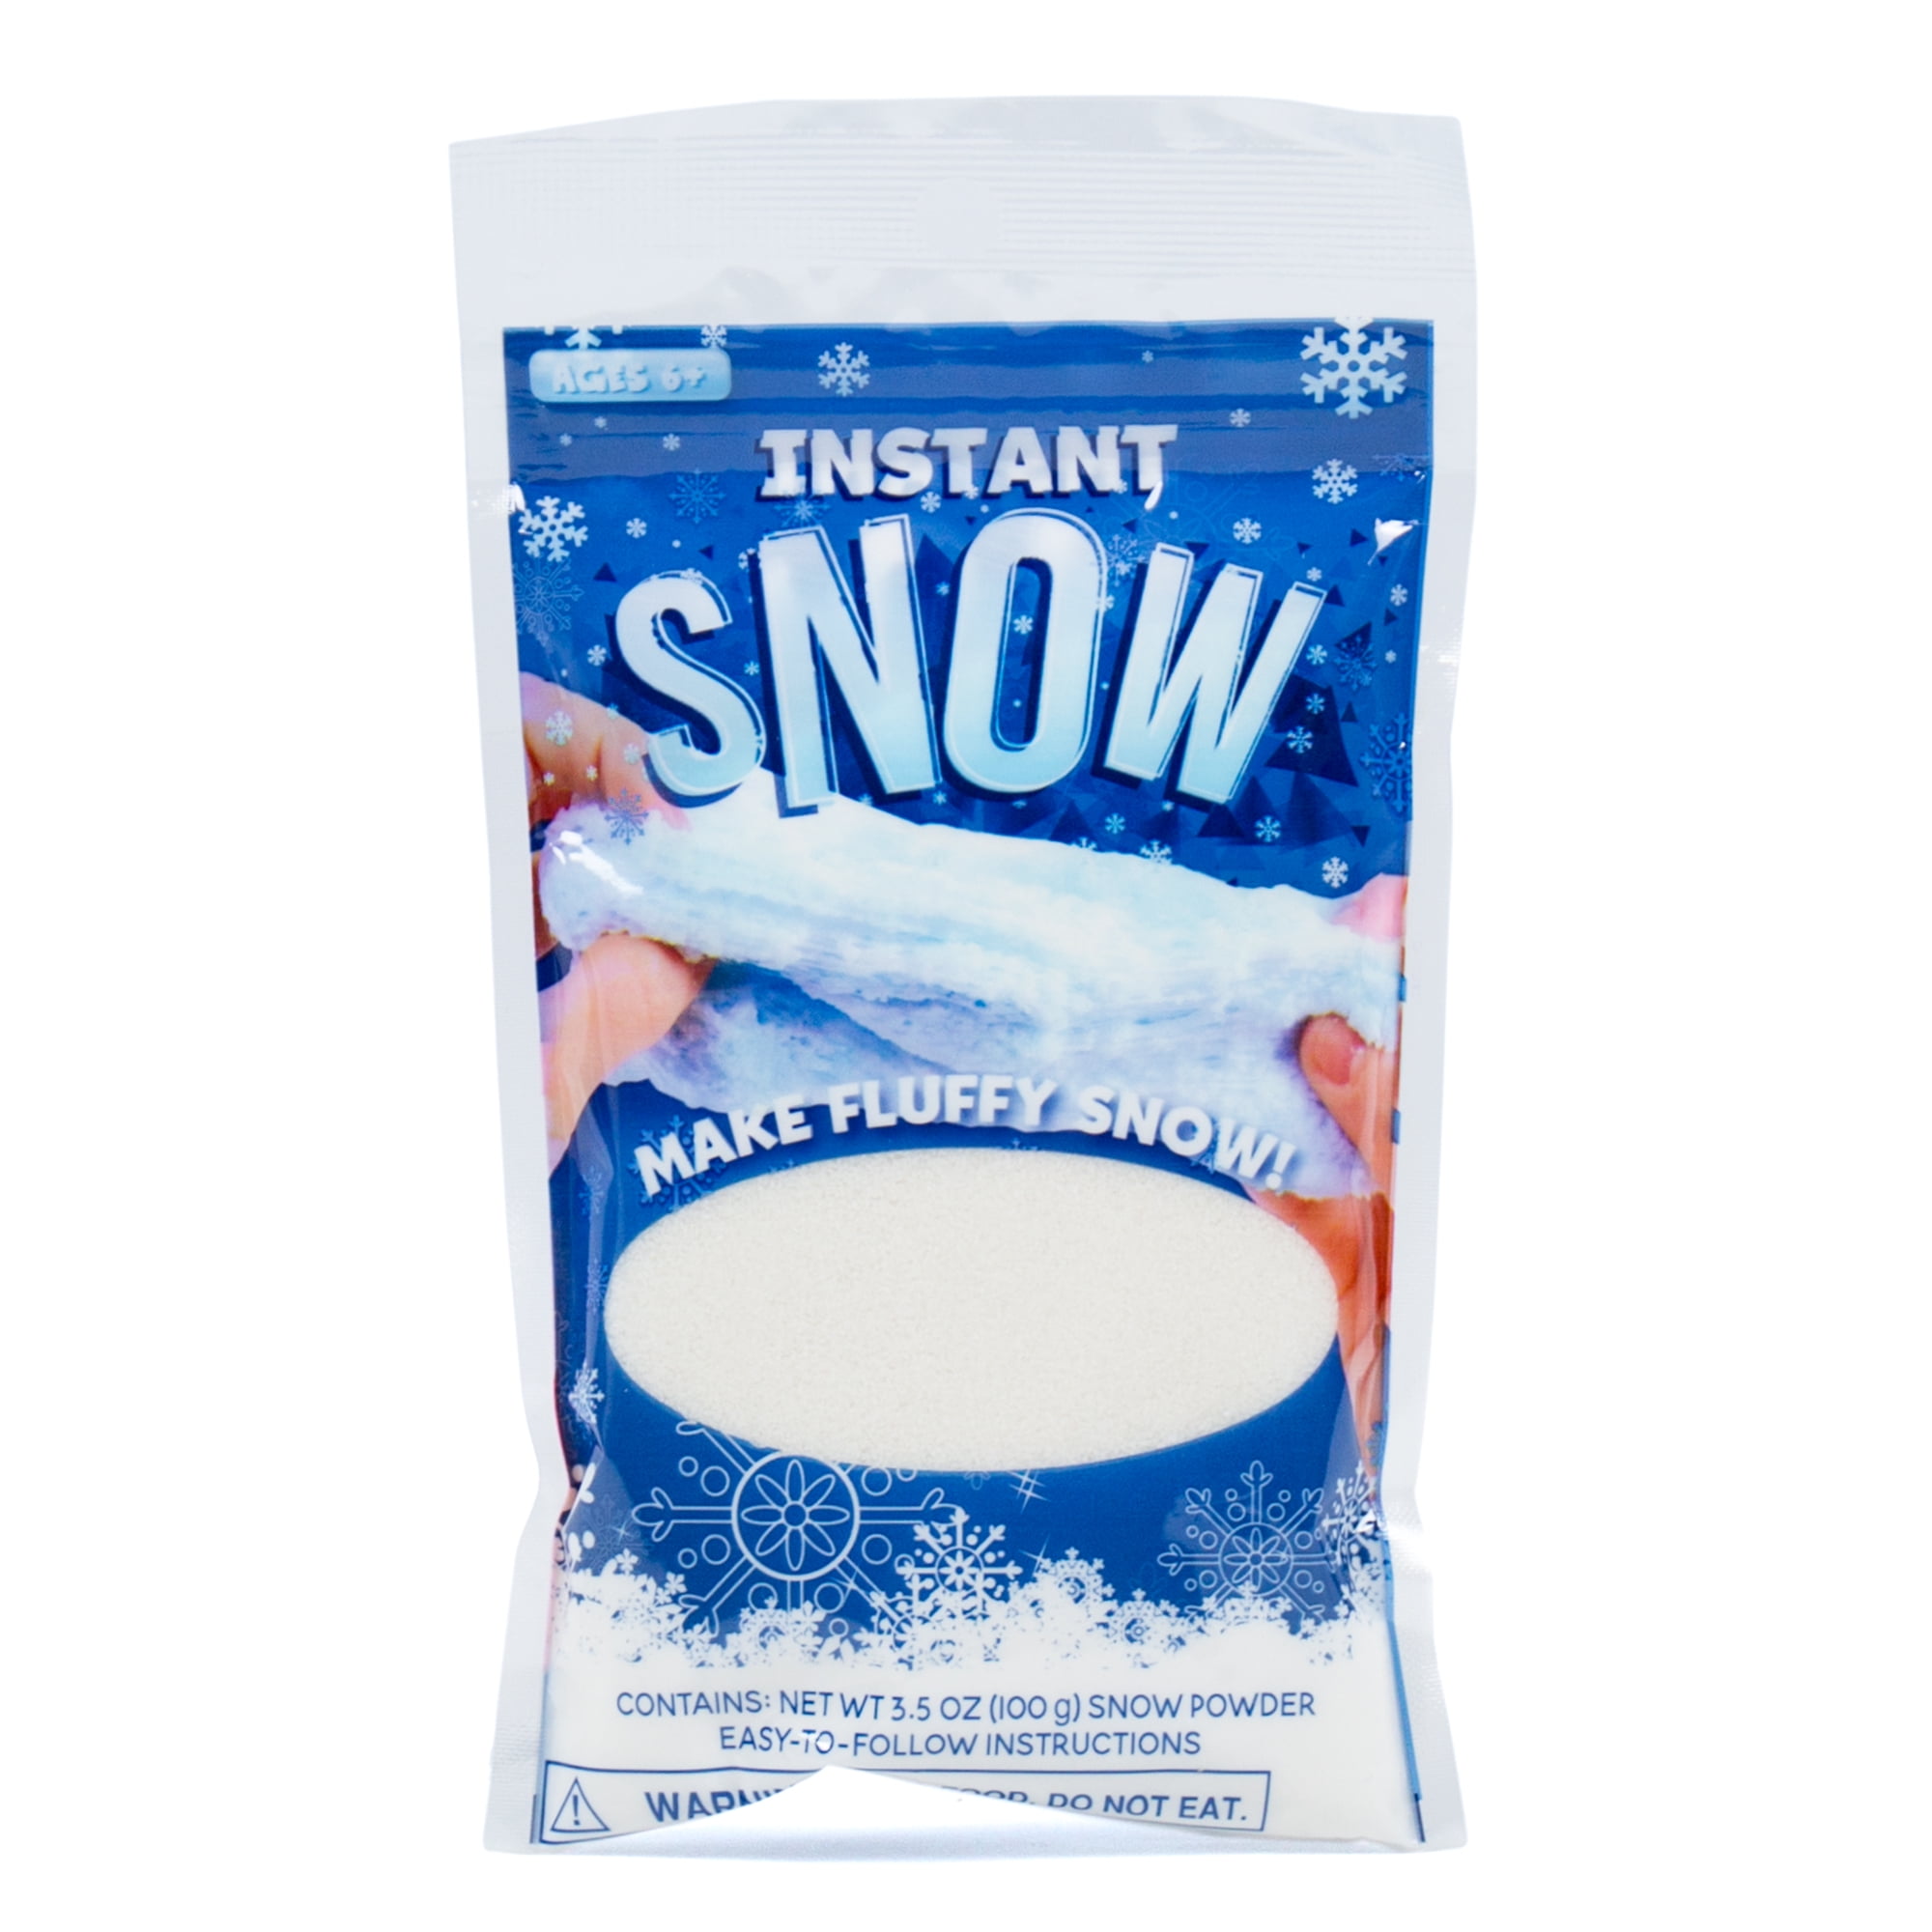 Horizon Group USA D.I.Y. Instant Snow, 3.5 oz.